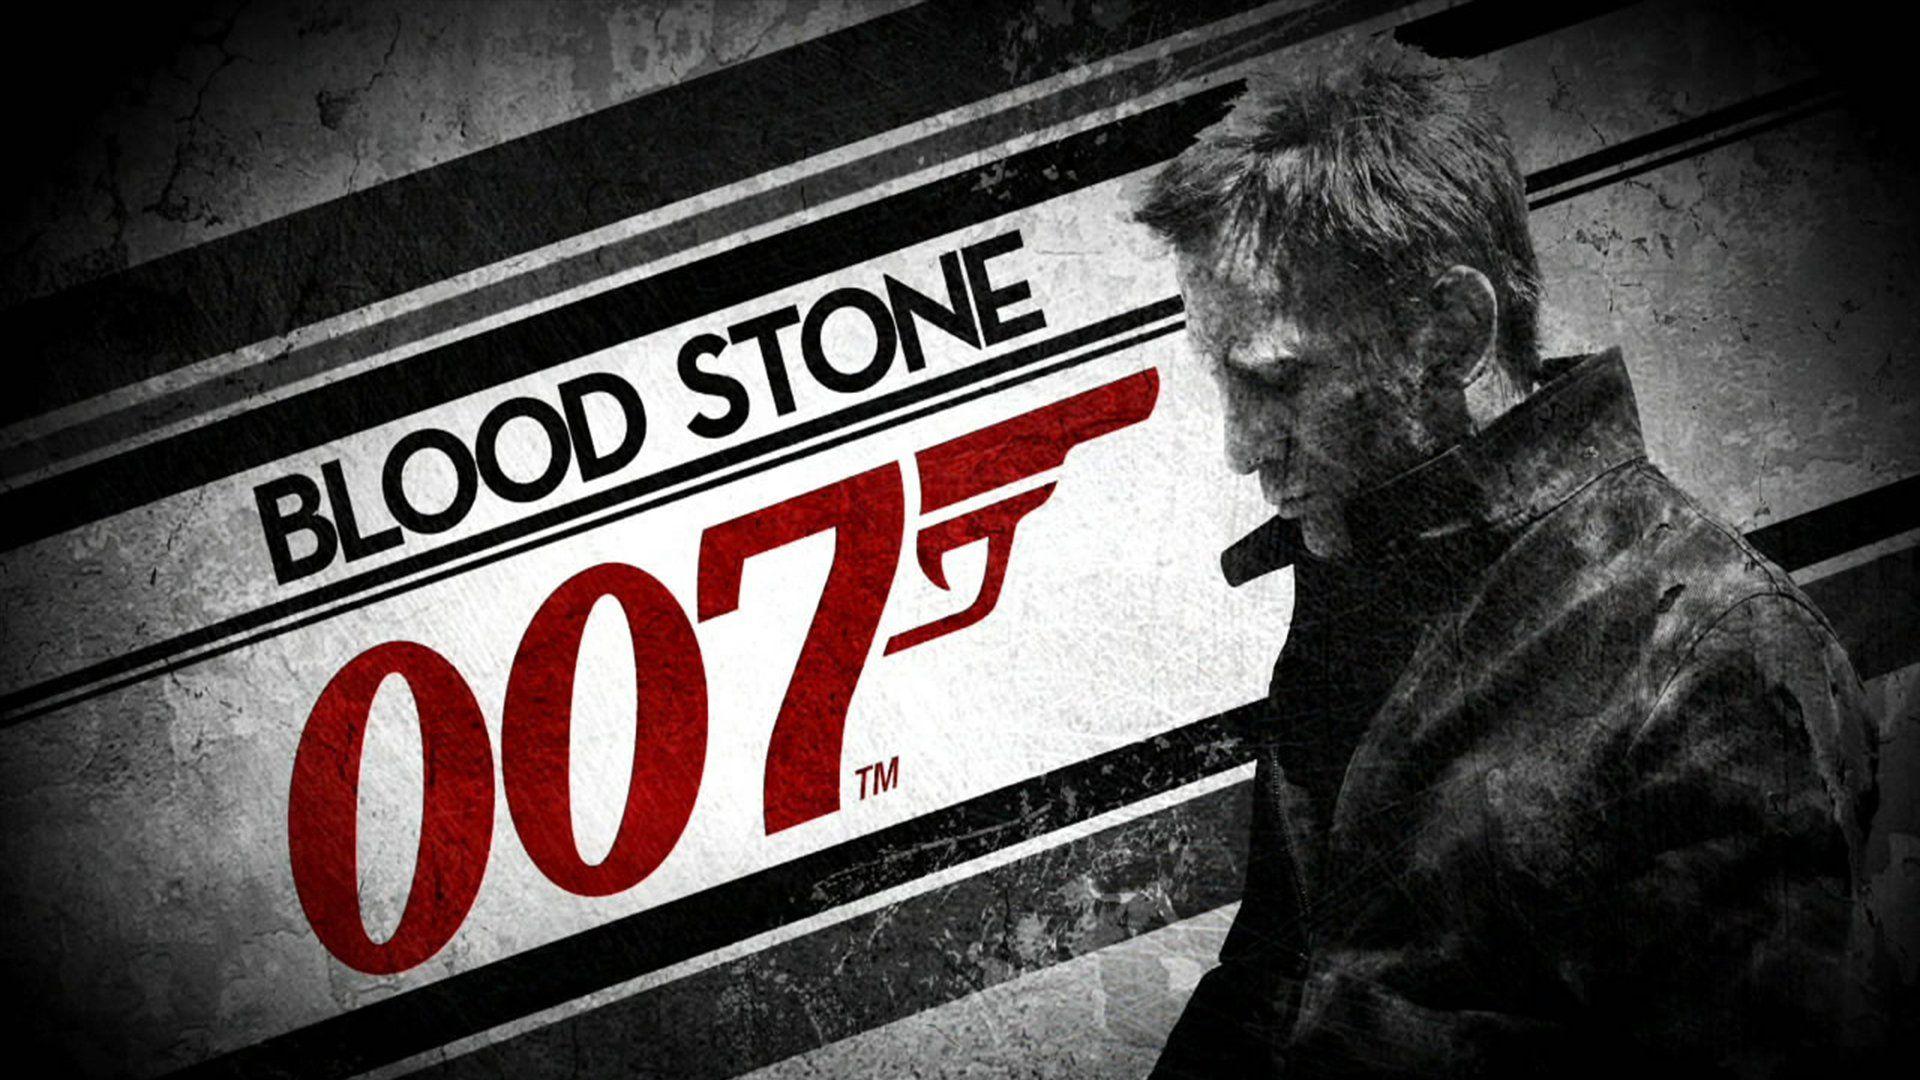 James Bond 007: Blood Stone HD Wallpaper. Background